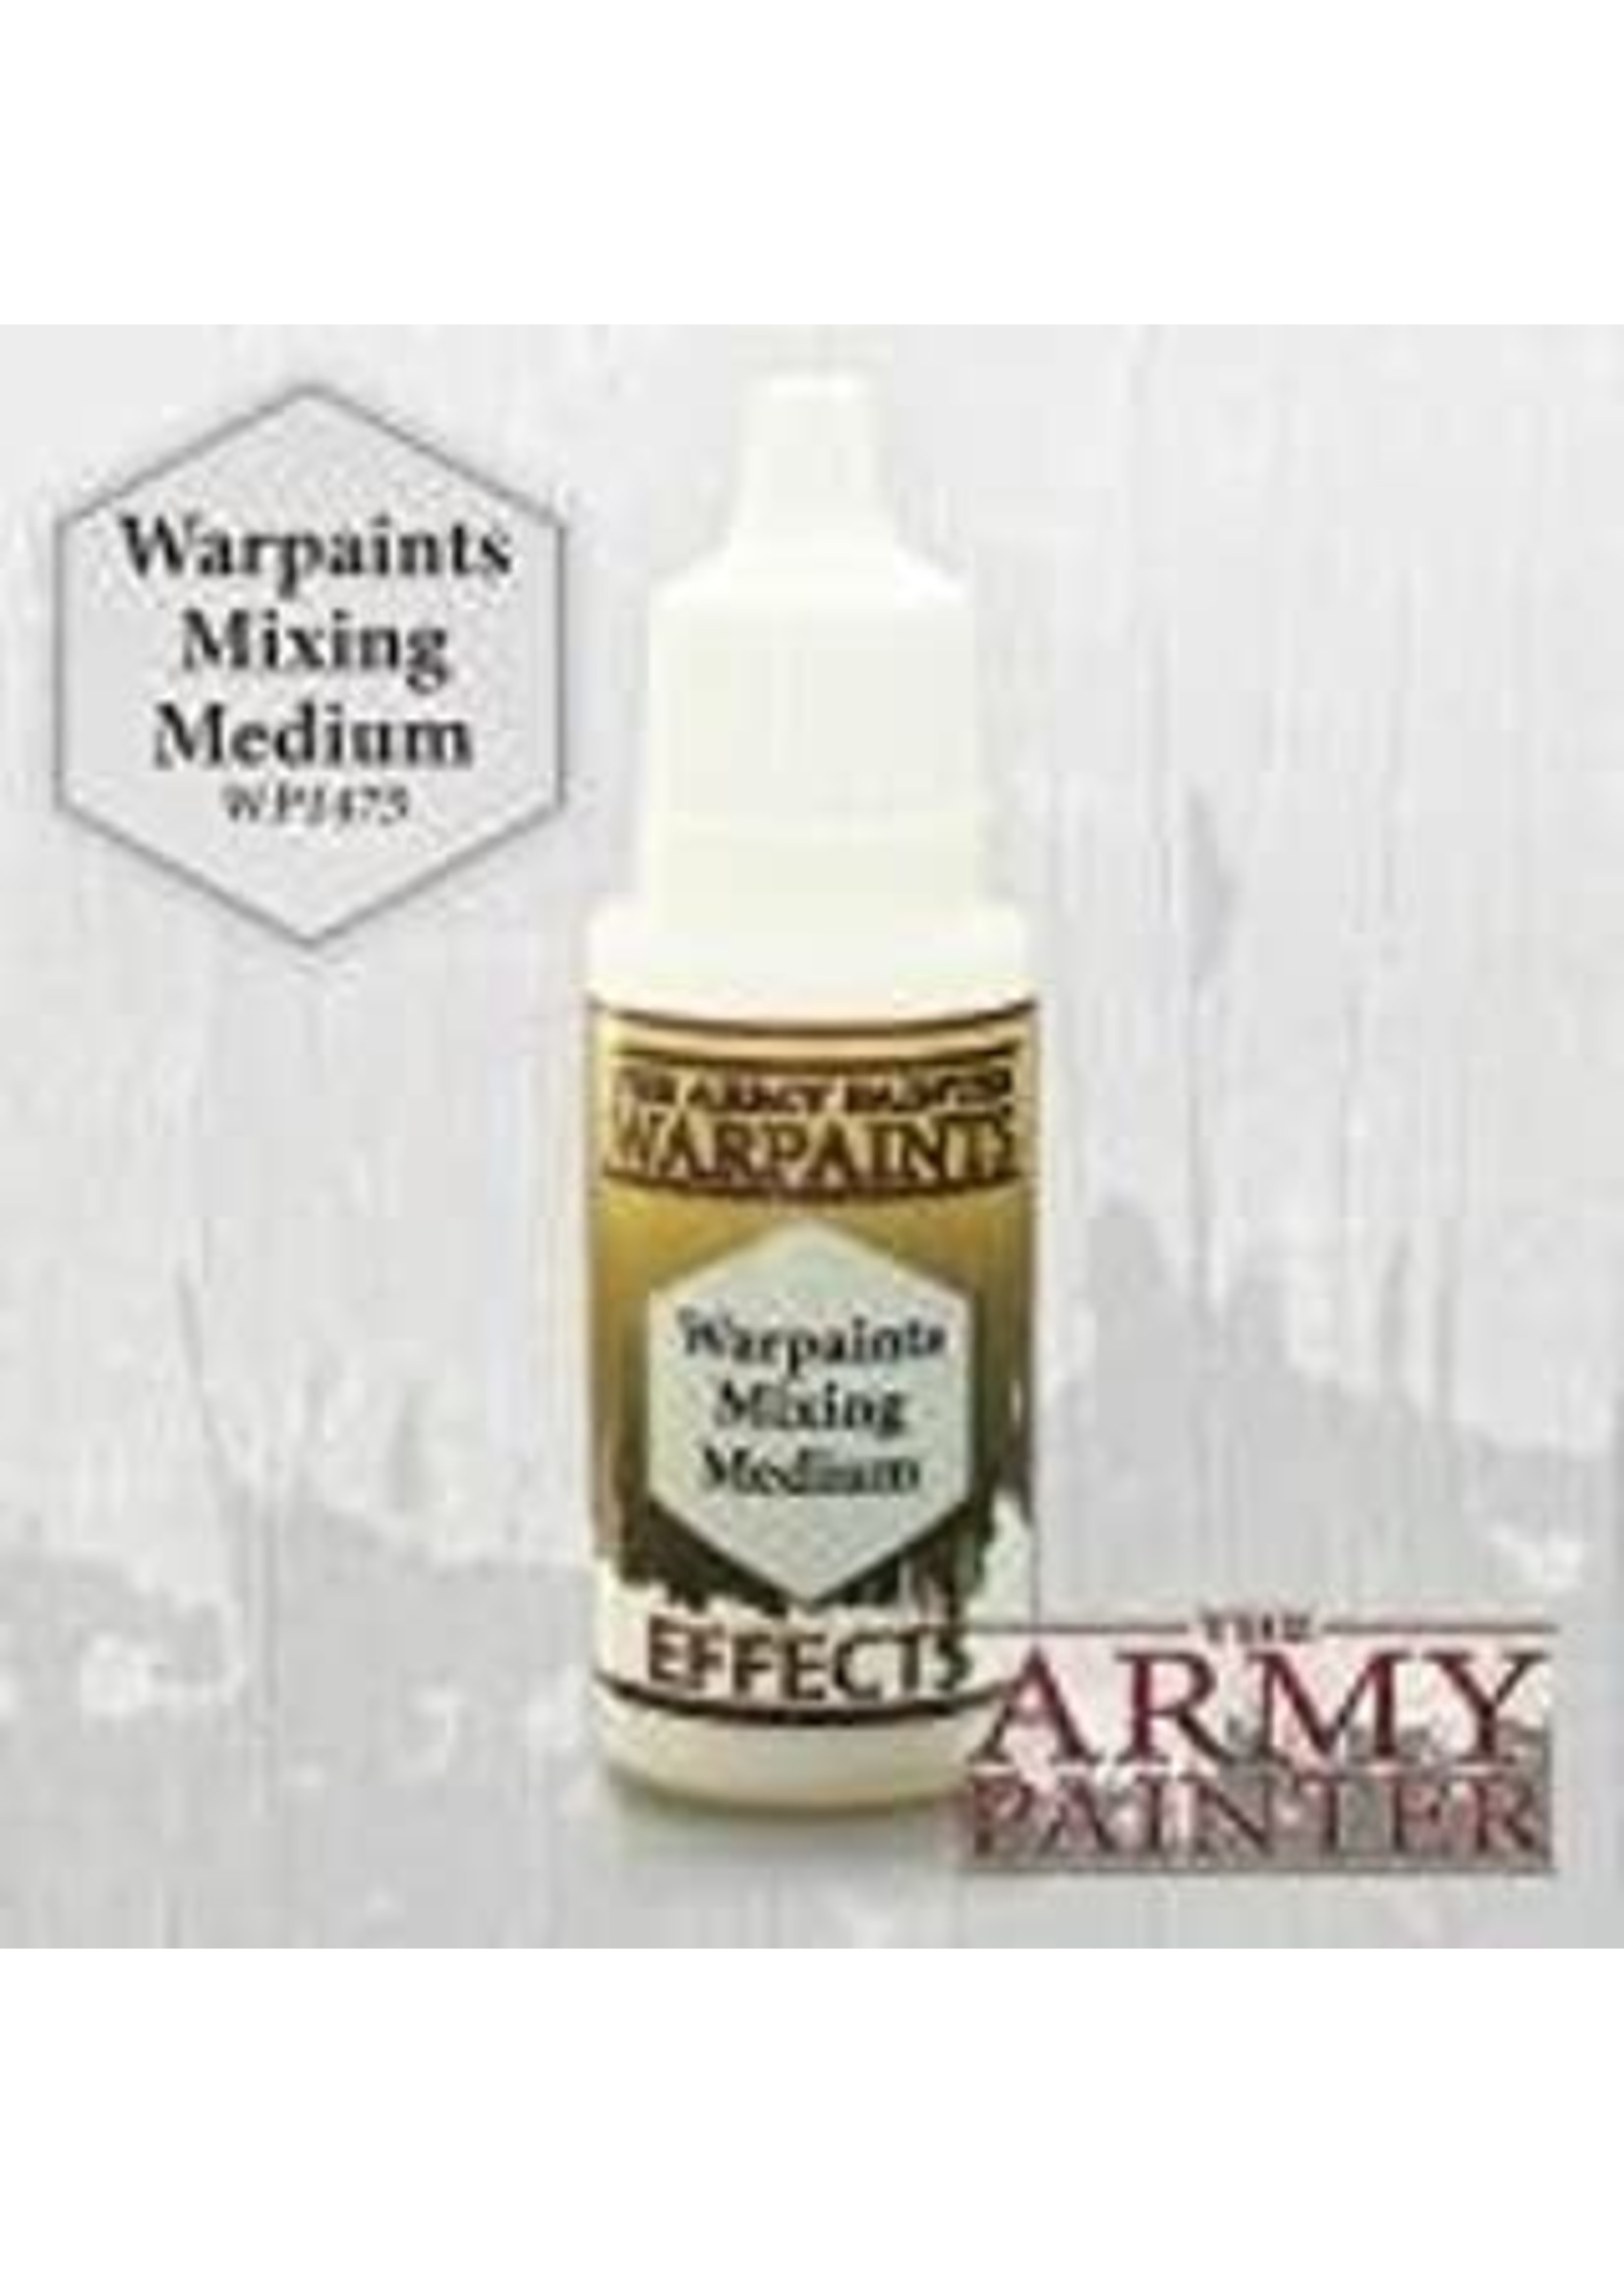 The Army Painter Effects Warpaints Warpaints Mixing Medium